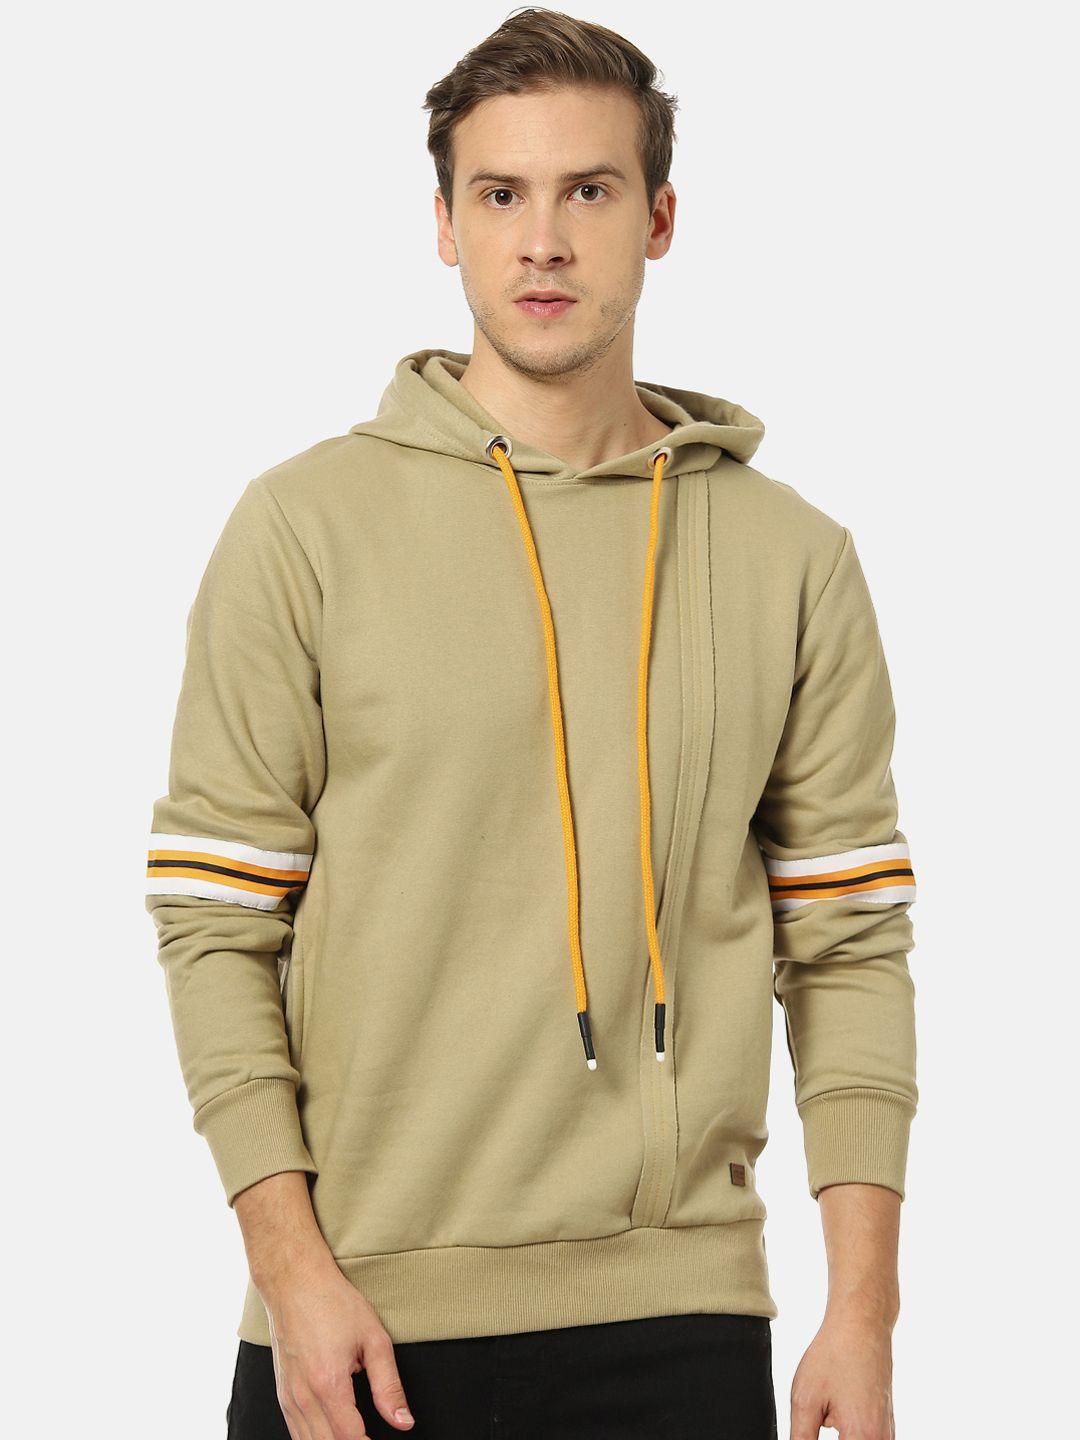 campus-sutra-men-beige-solid-hooded-sweatshirt